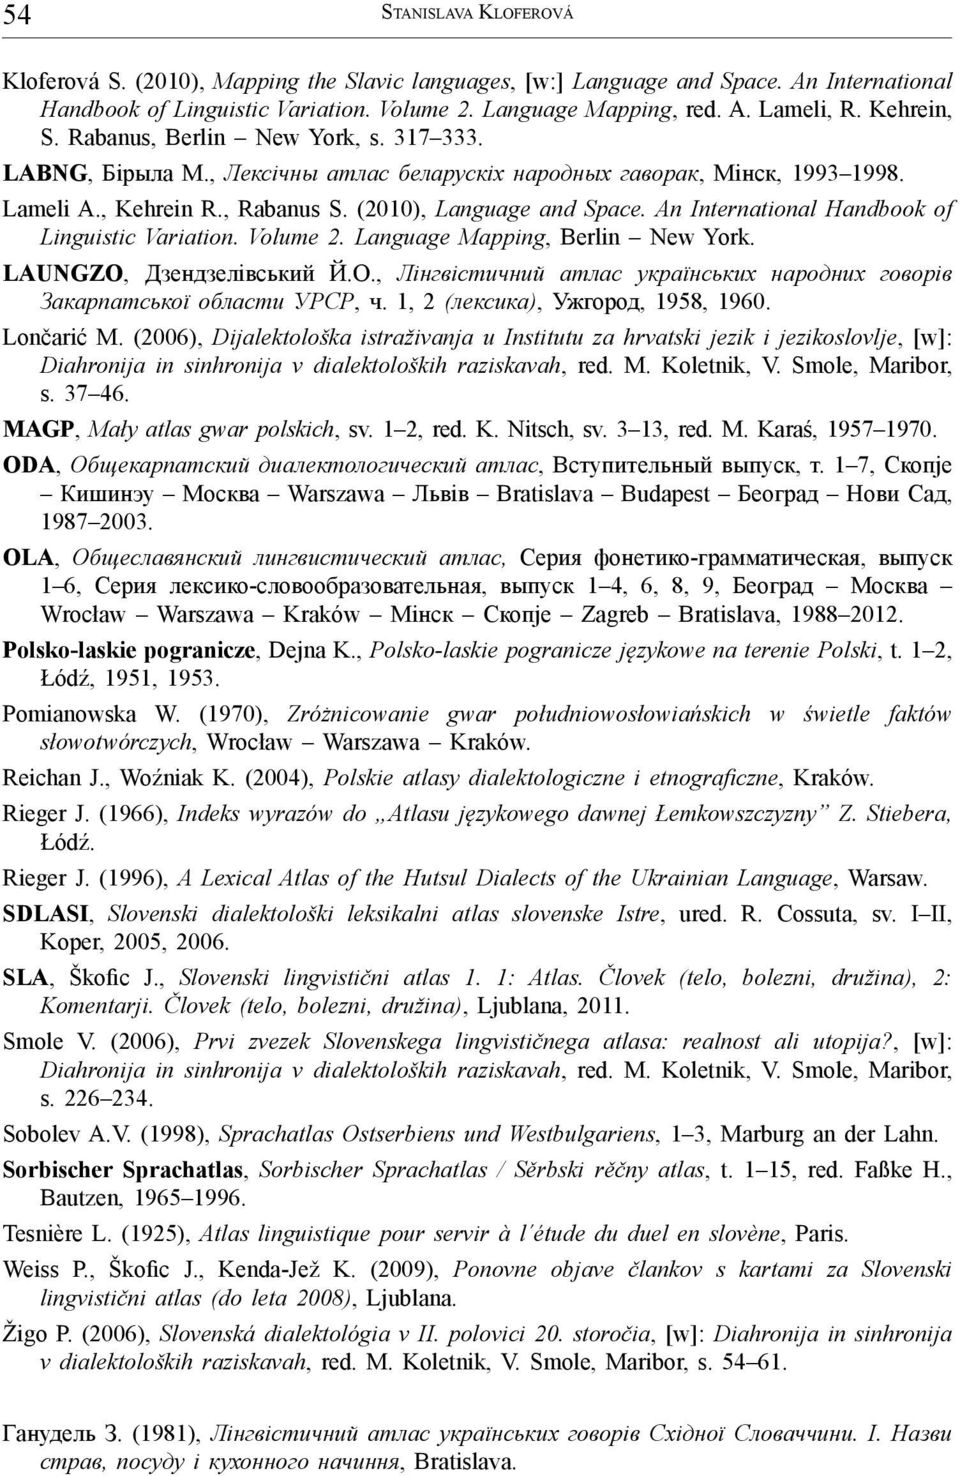 An International Handbook of Linguistic Variation. Volume 2. Language Mapping, Berlin New York. LAUNGZO, Дзендзелiвський Й.О.